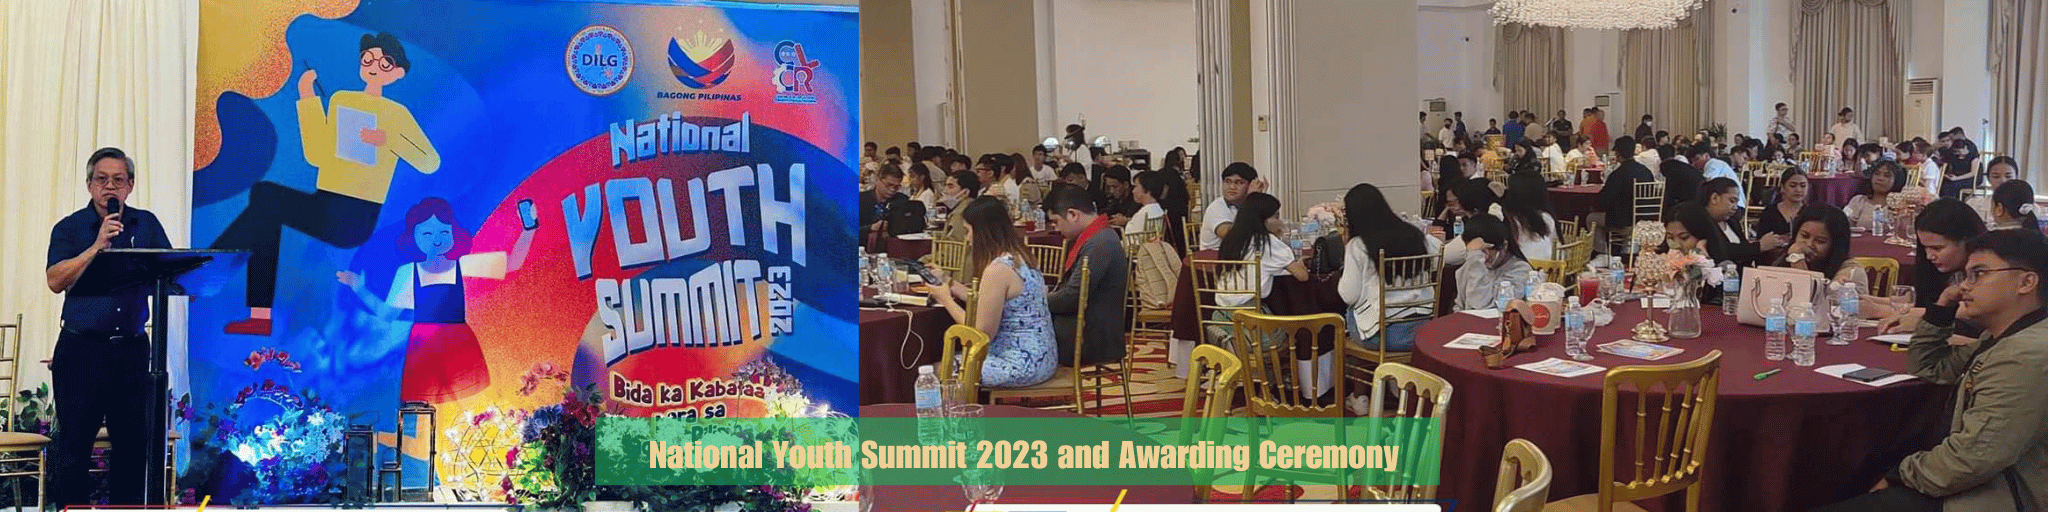 National Youth Summit 2023 and Awarding Ceremony